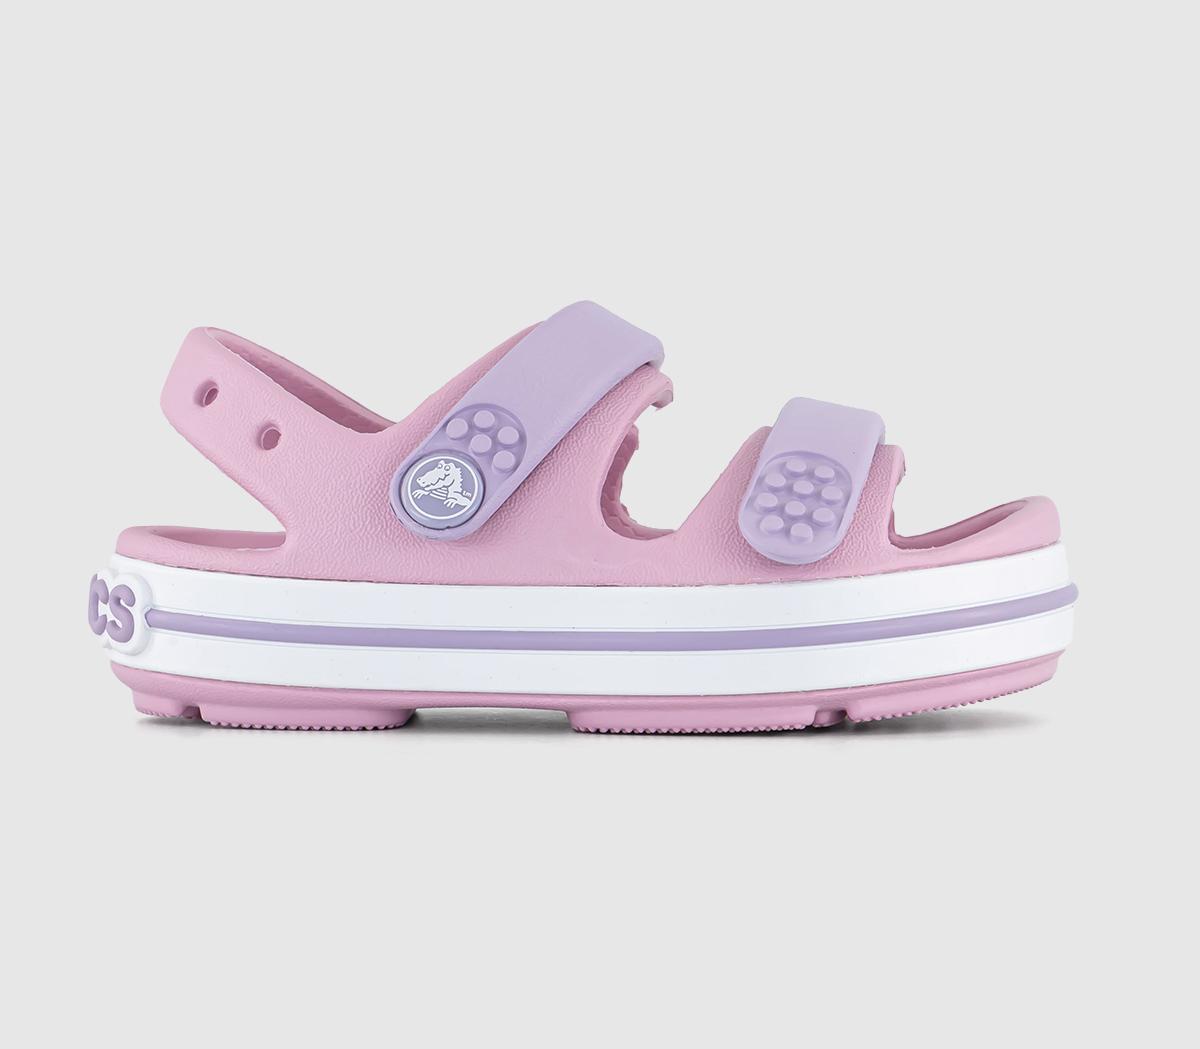 CrocsCrocband Cruiser Toddler SandalsBallerina Pink Lavender